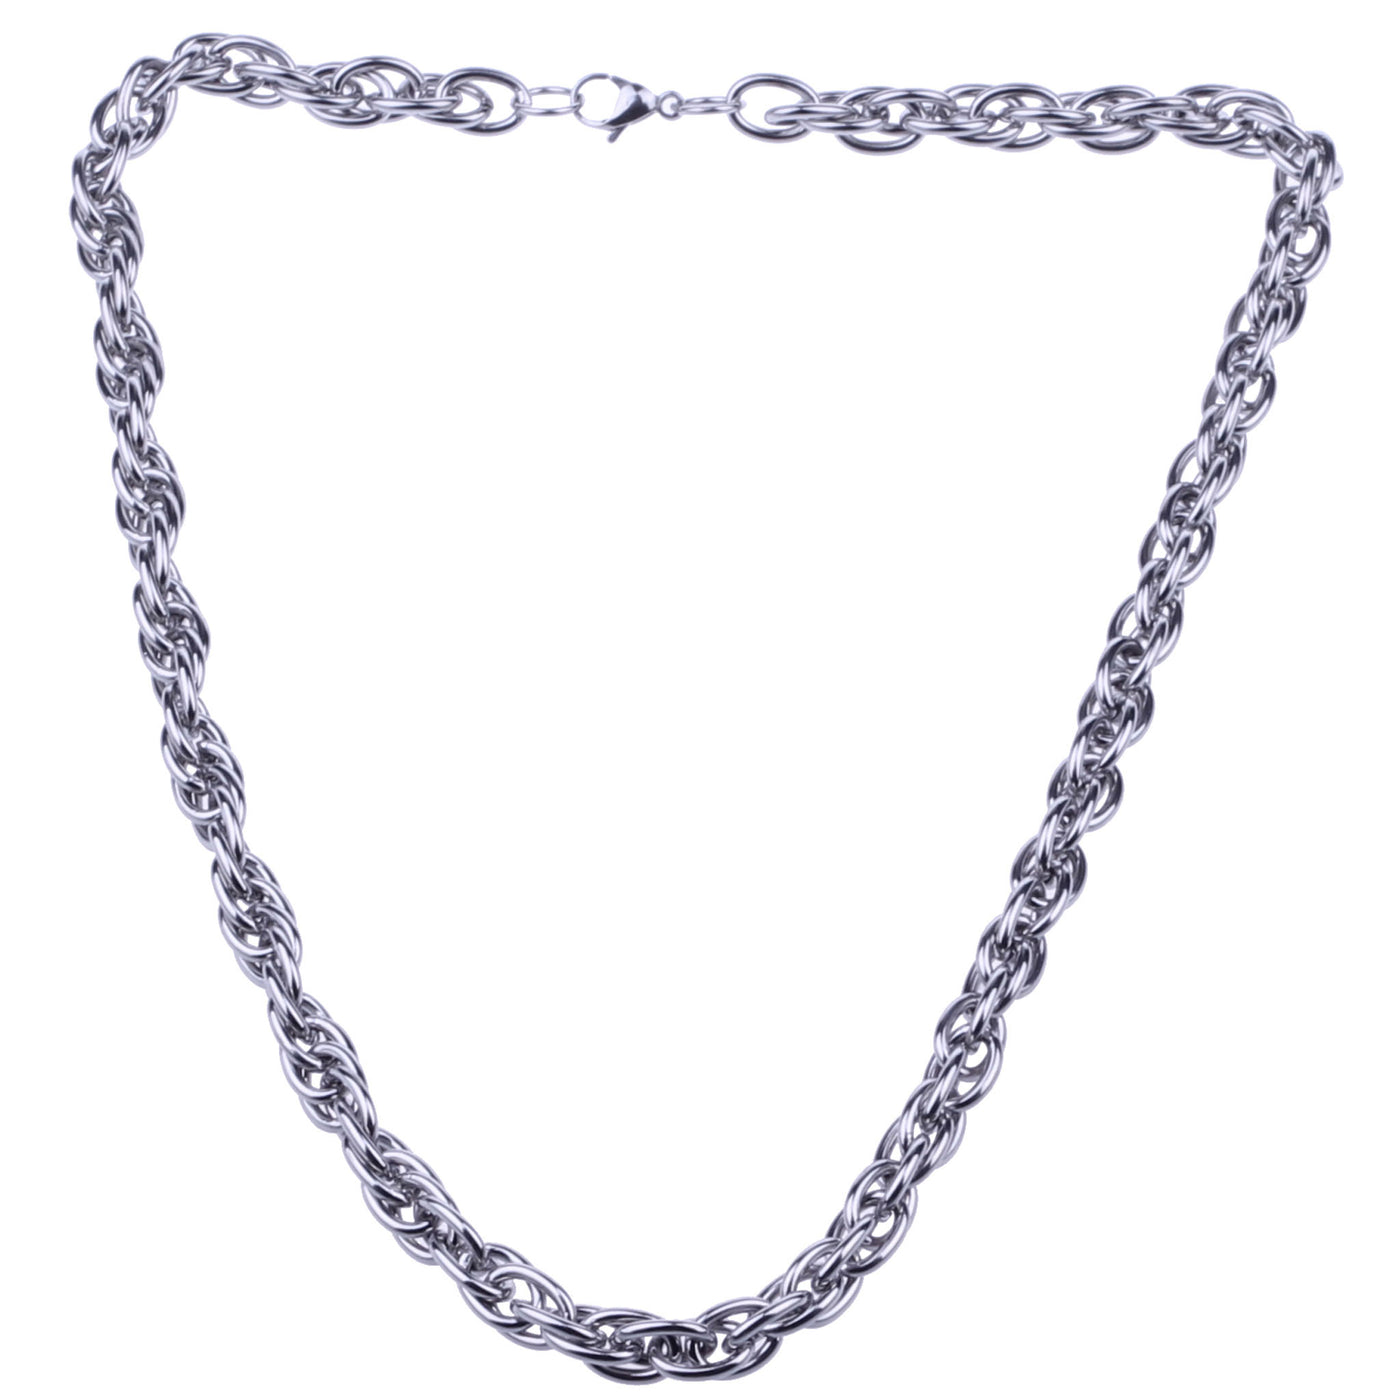 Steel chain 60cm